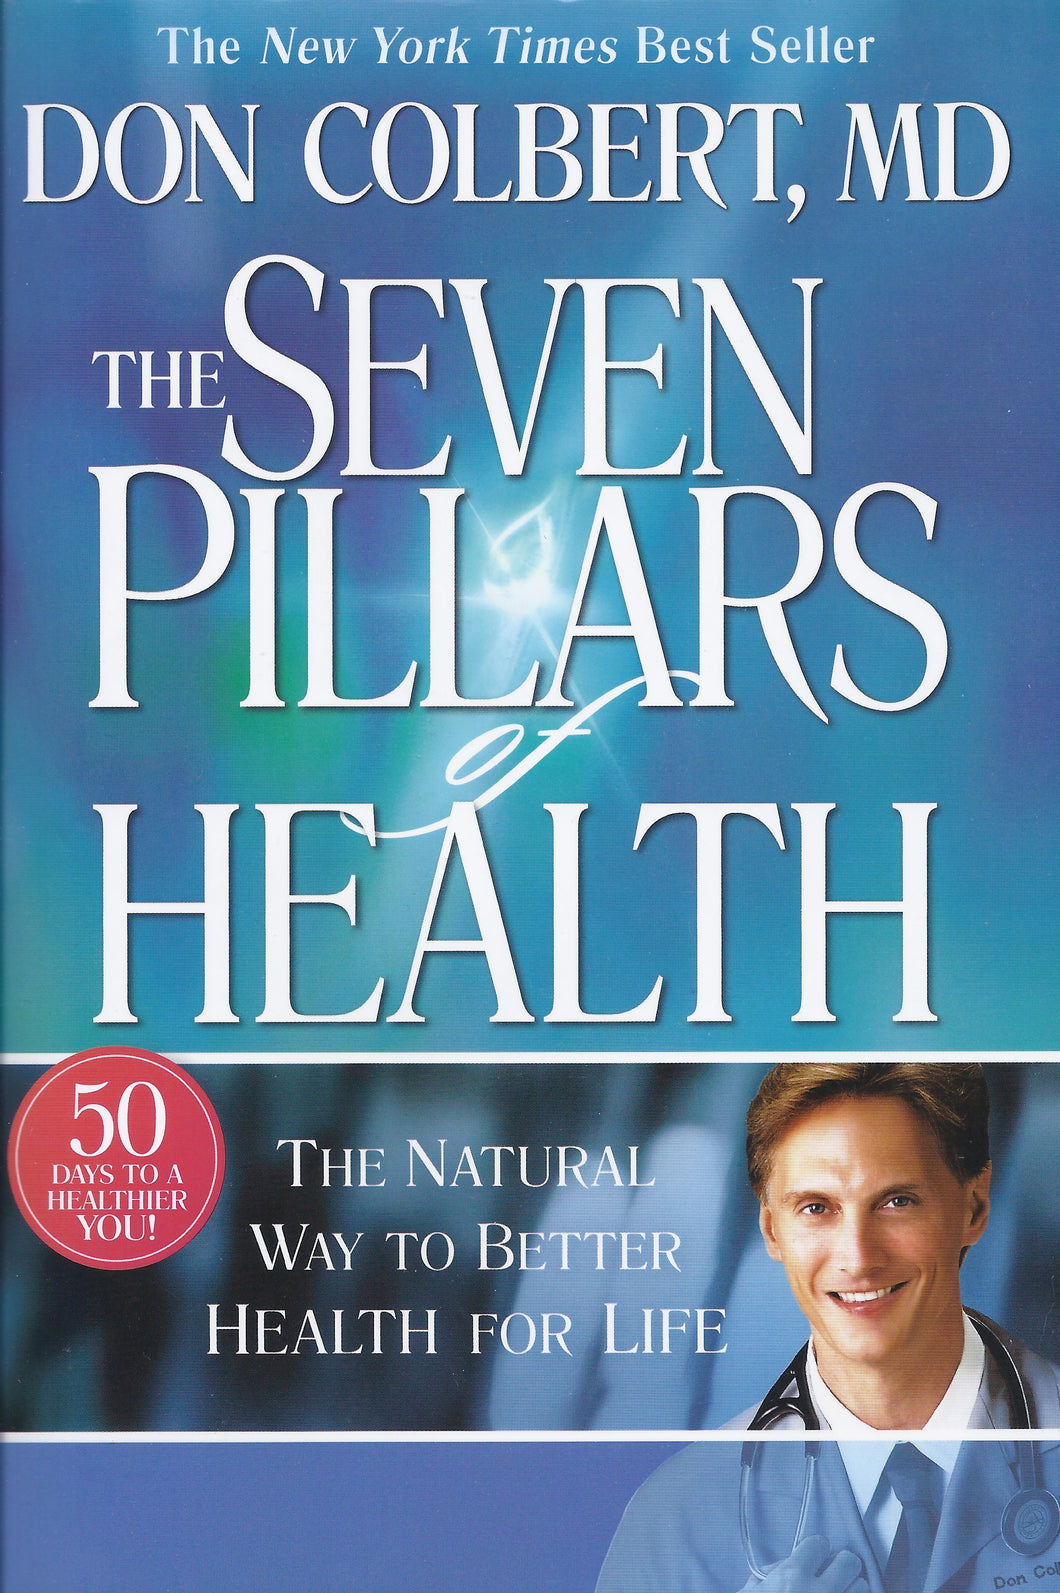 THE SEVEN PILLARS OF HEALTH